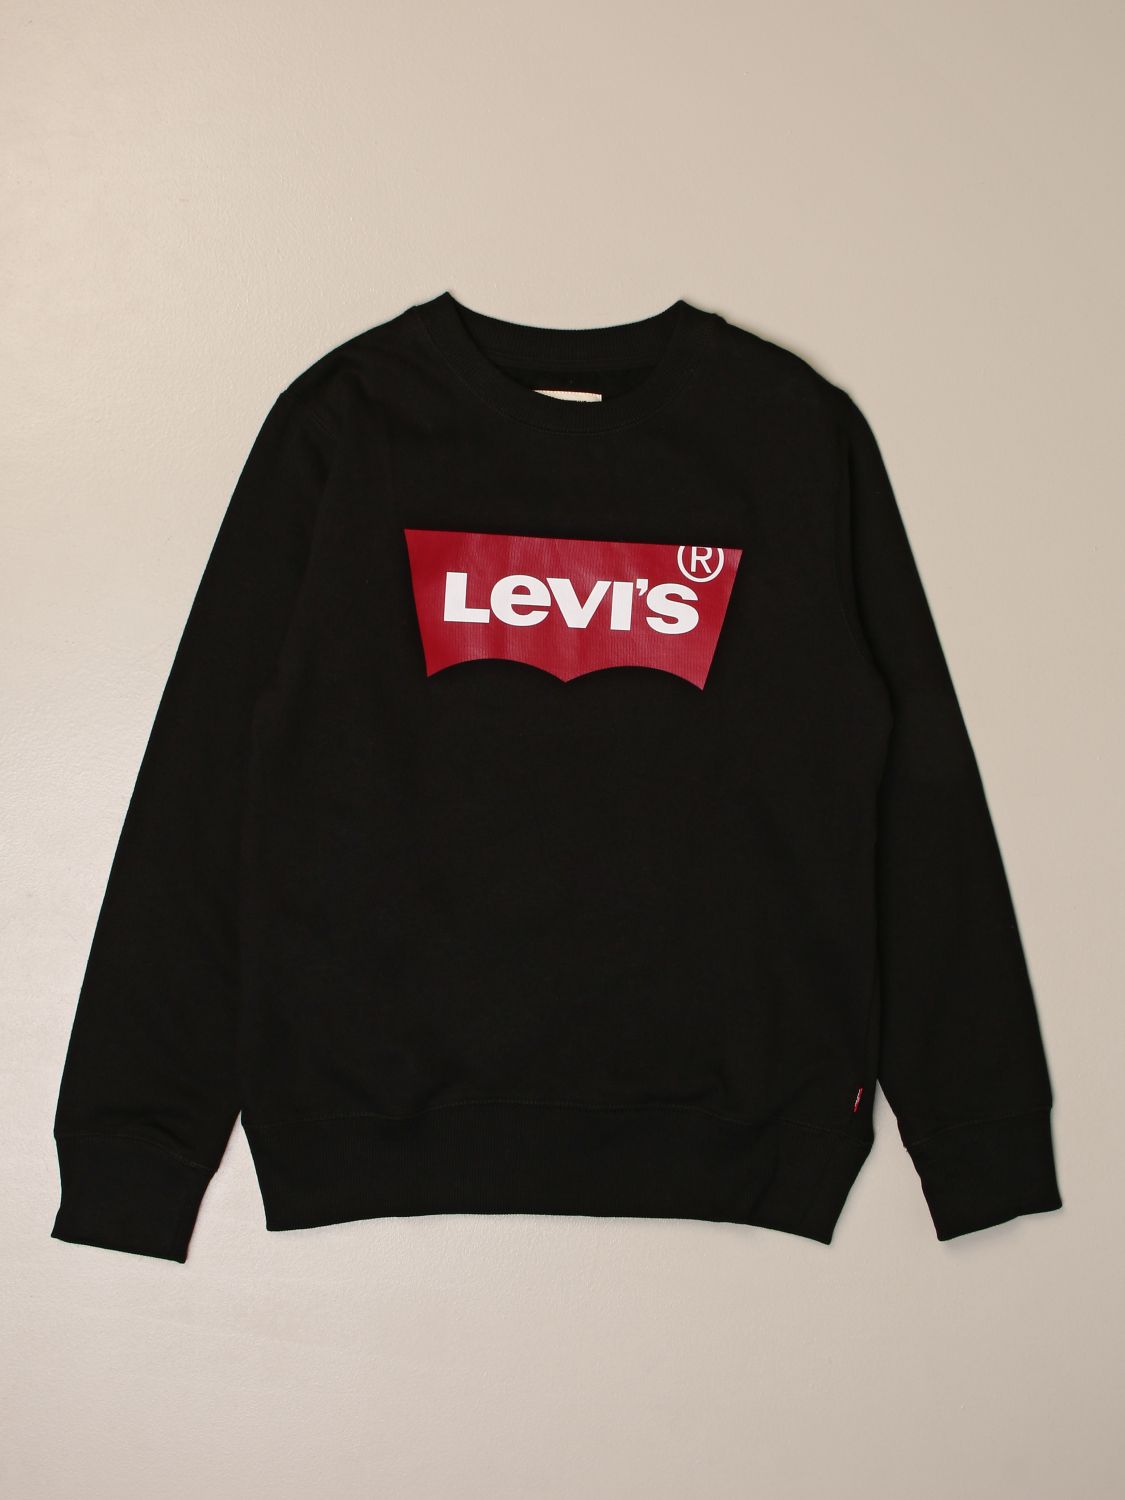 levi's black sweater